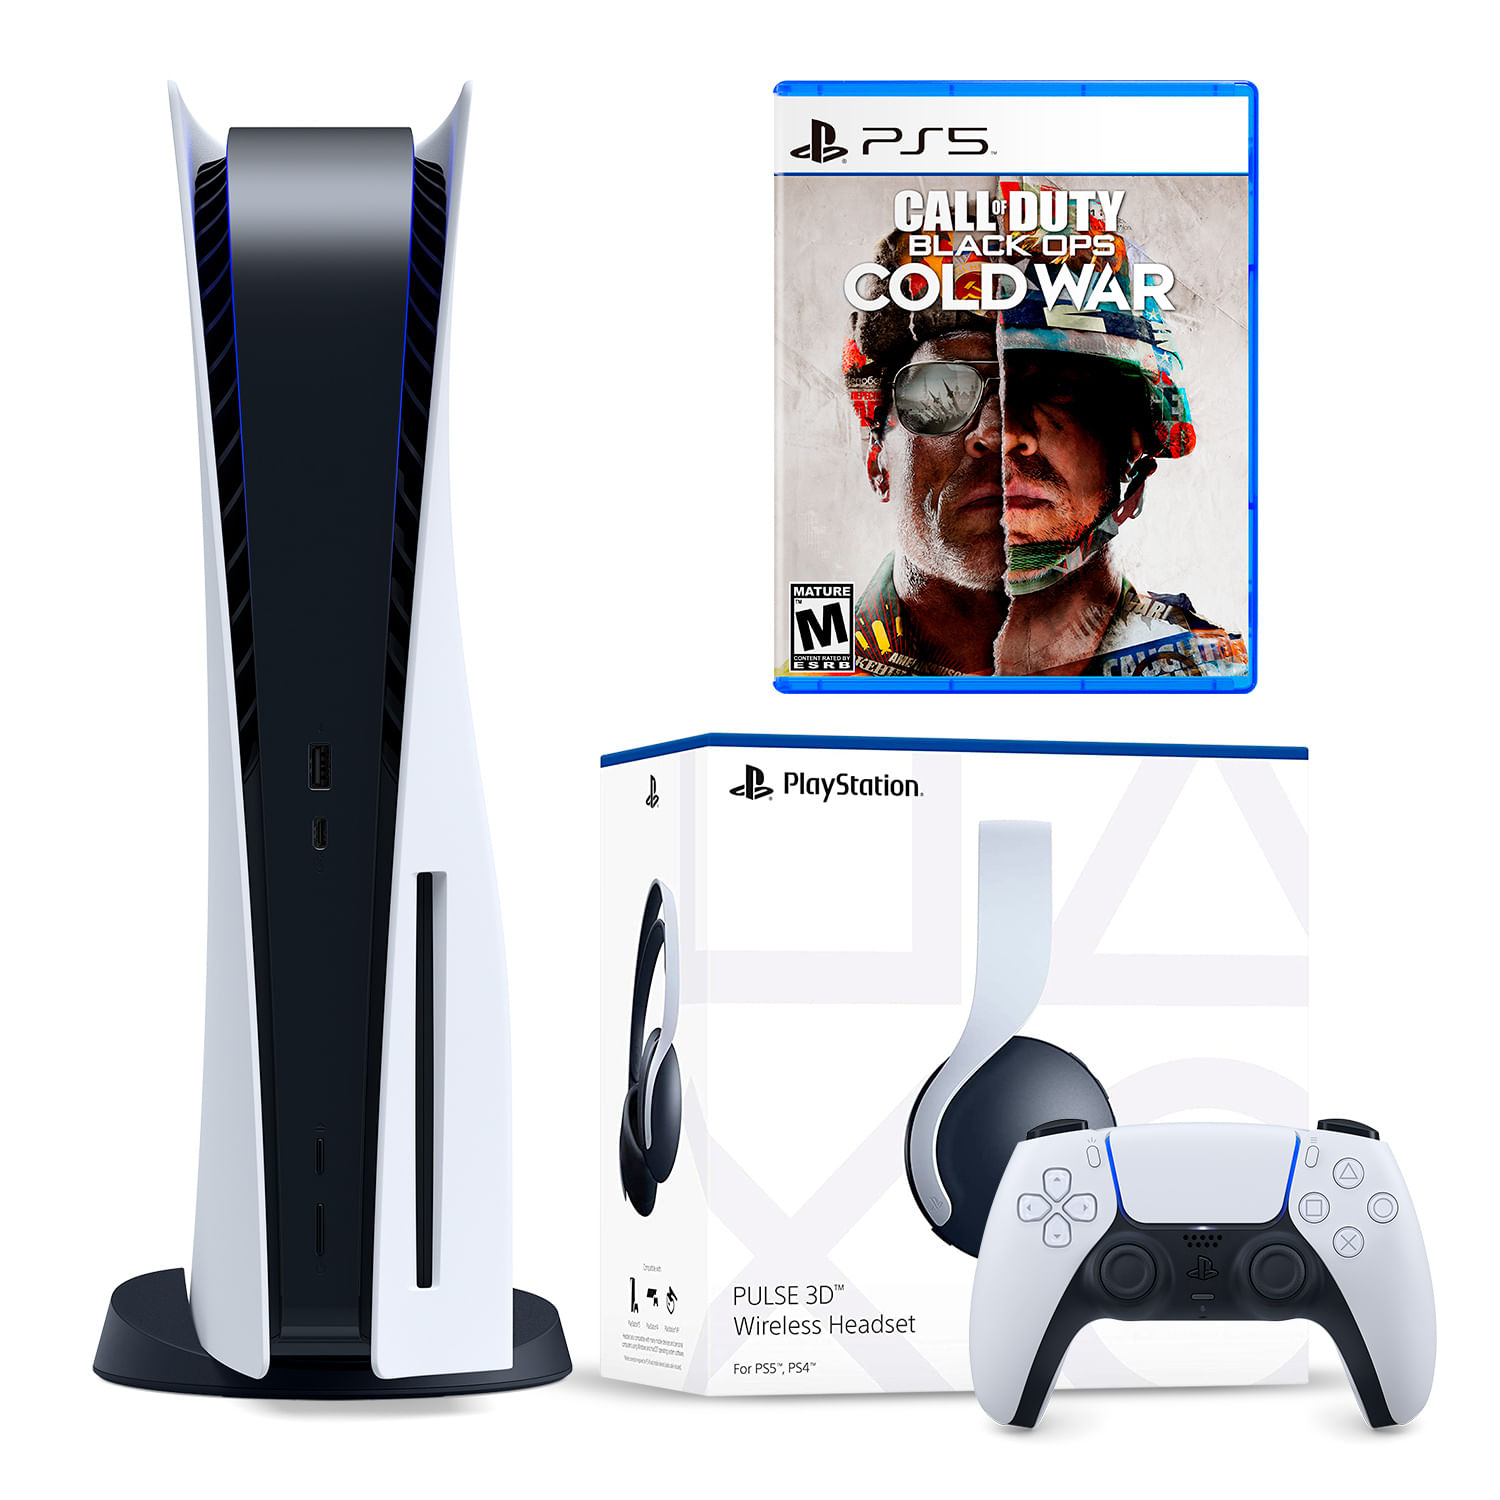 Consola Ps5 con Lector de Discos + Audifono Pulse 3D + Call of Duty Black Ops Cold War